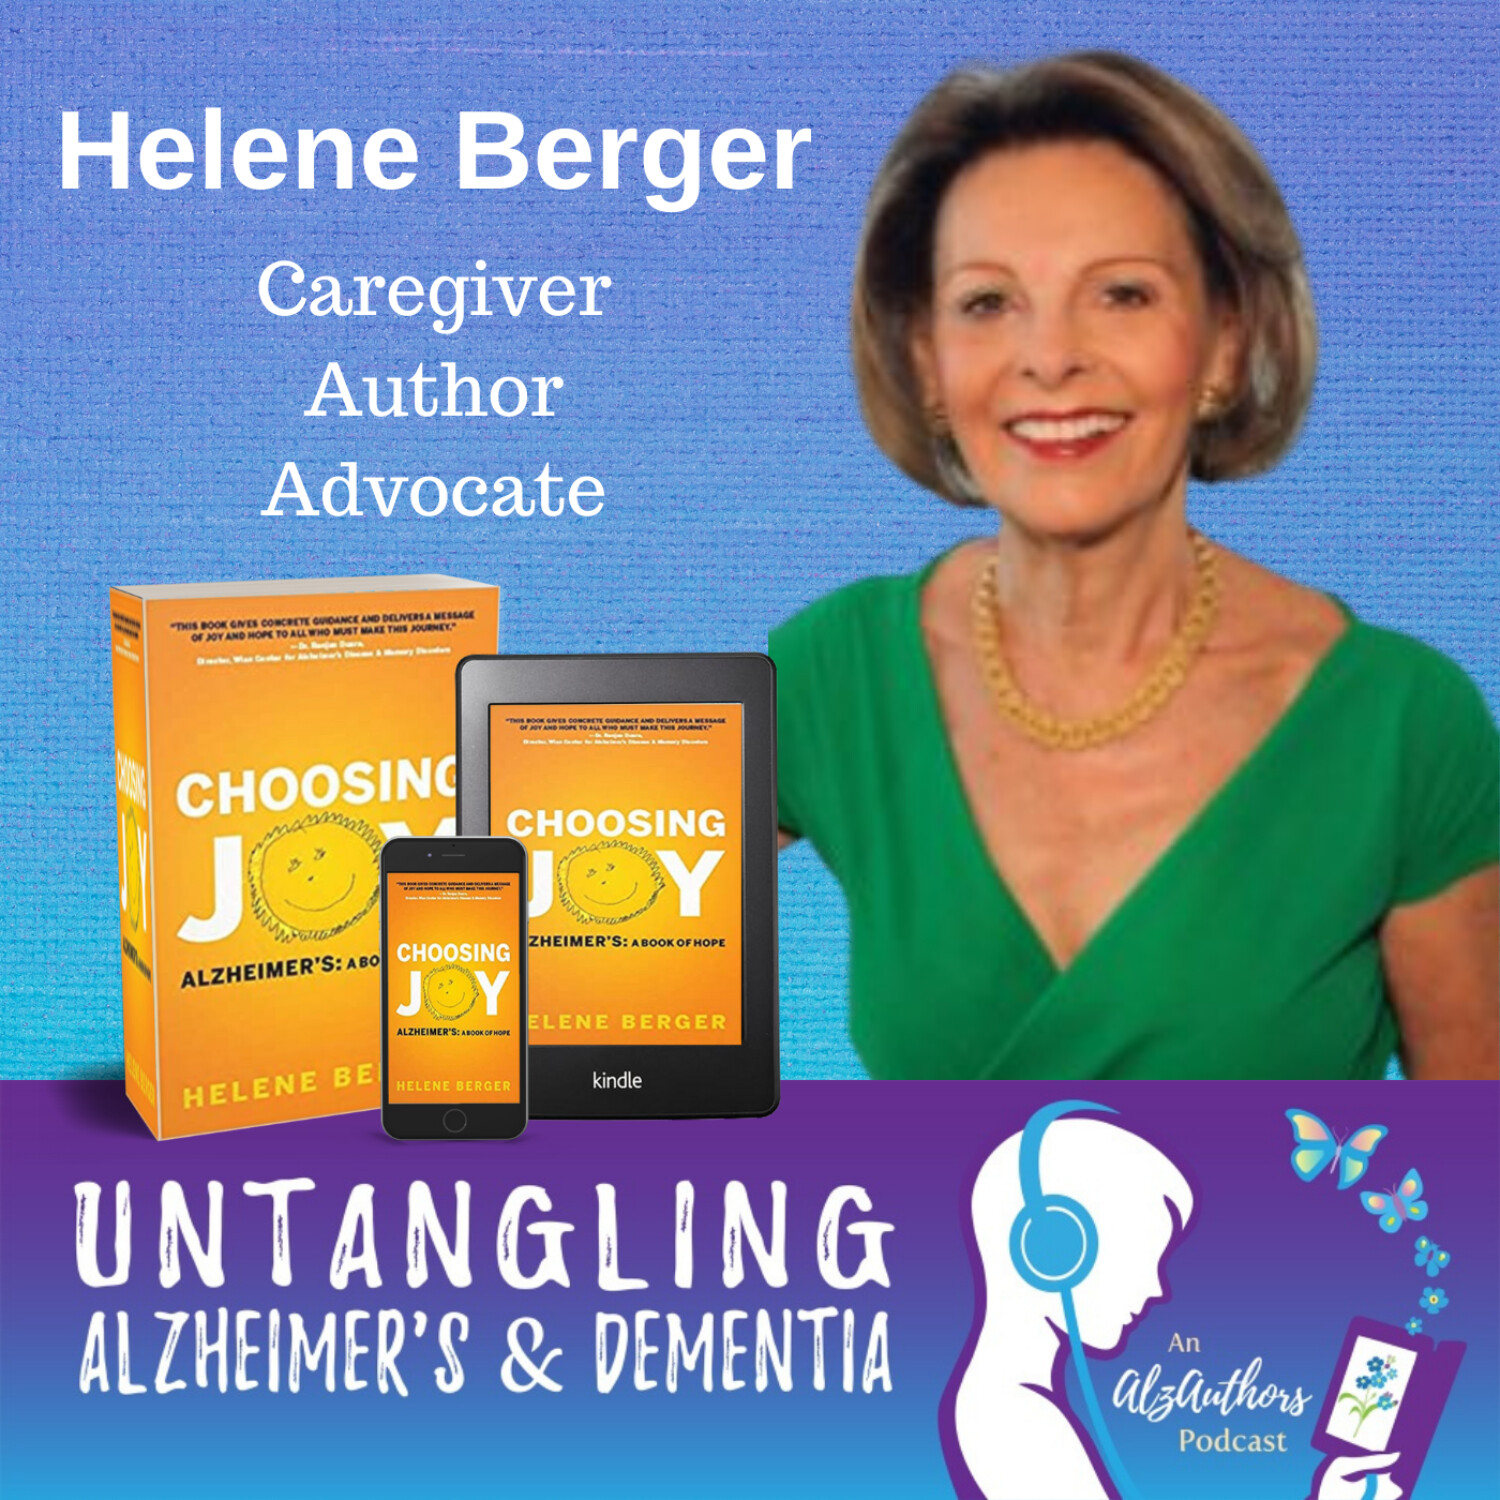 Helene Berger Untangles Choosing Joy in the Dementia Journey